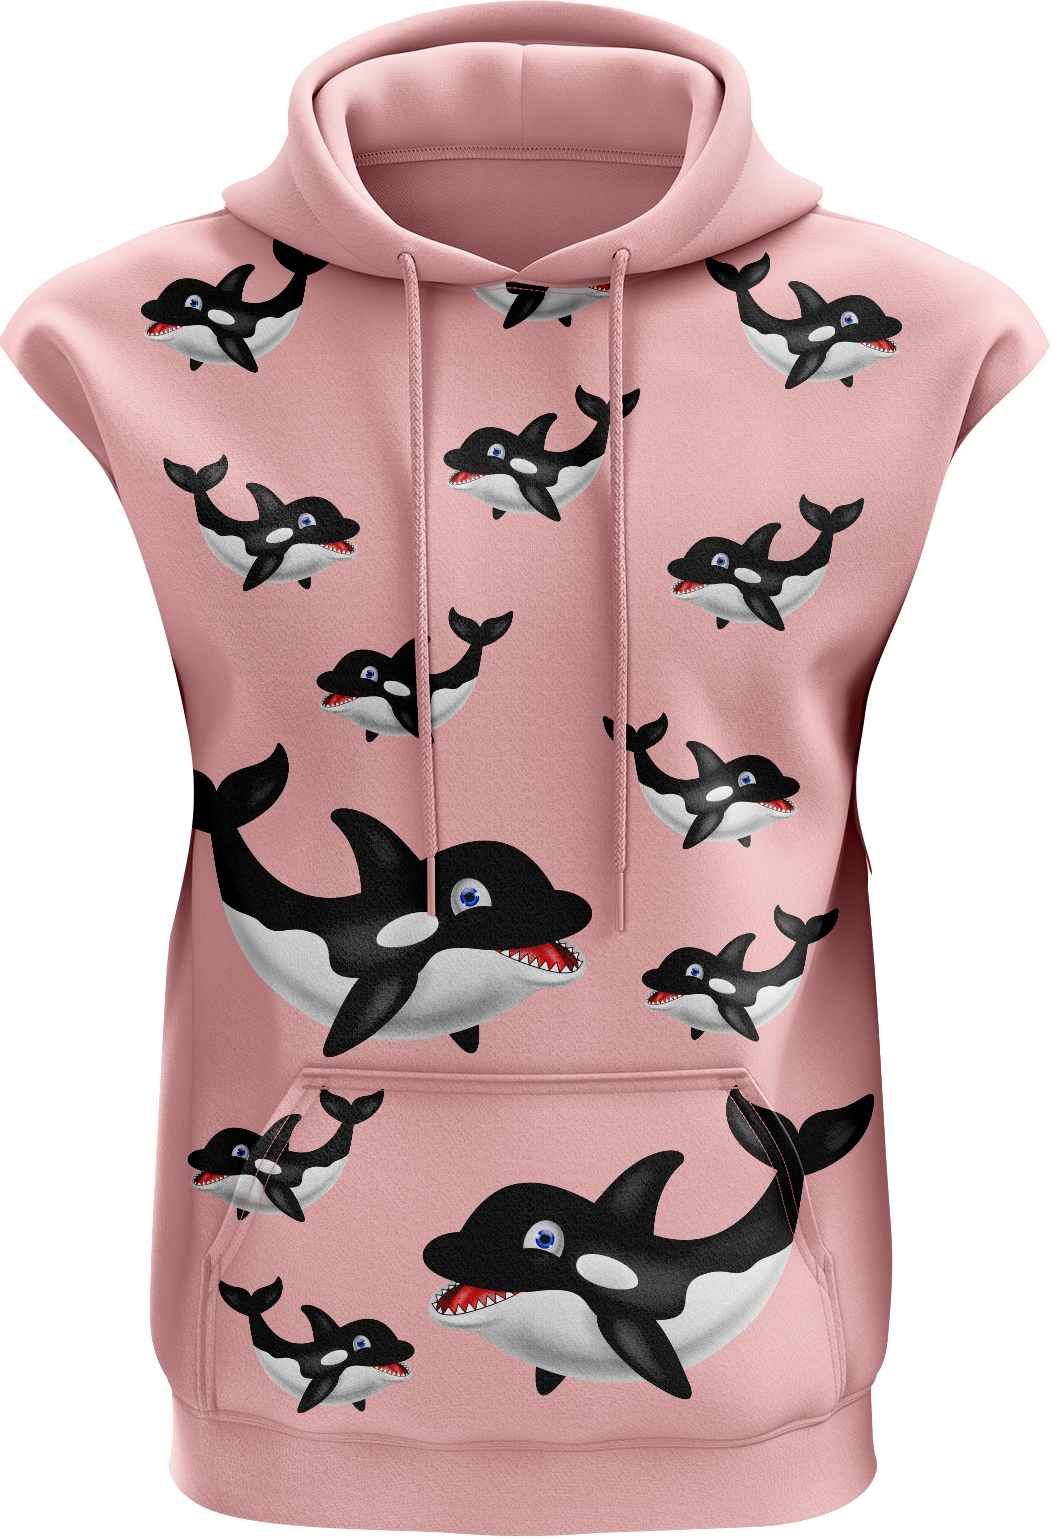 Orca Whale Sleeveless Hoodie